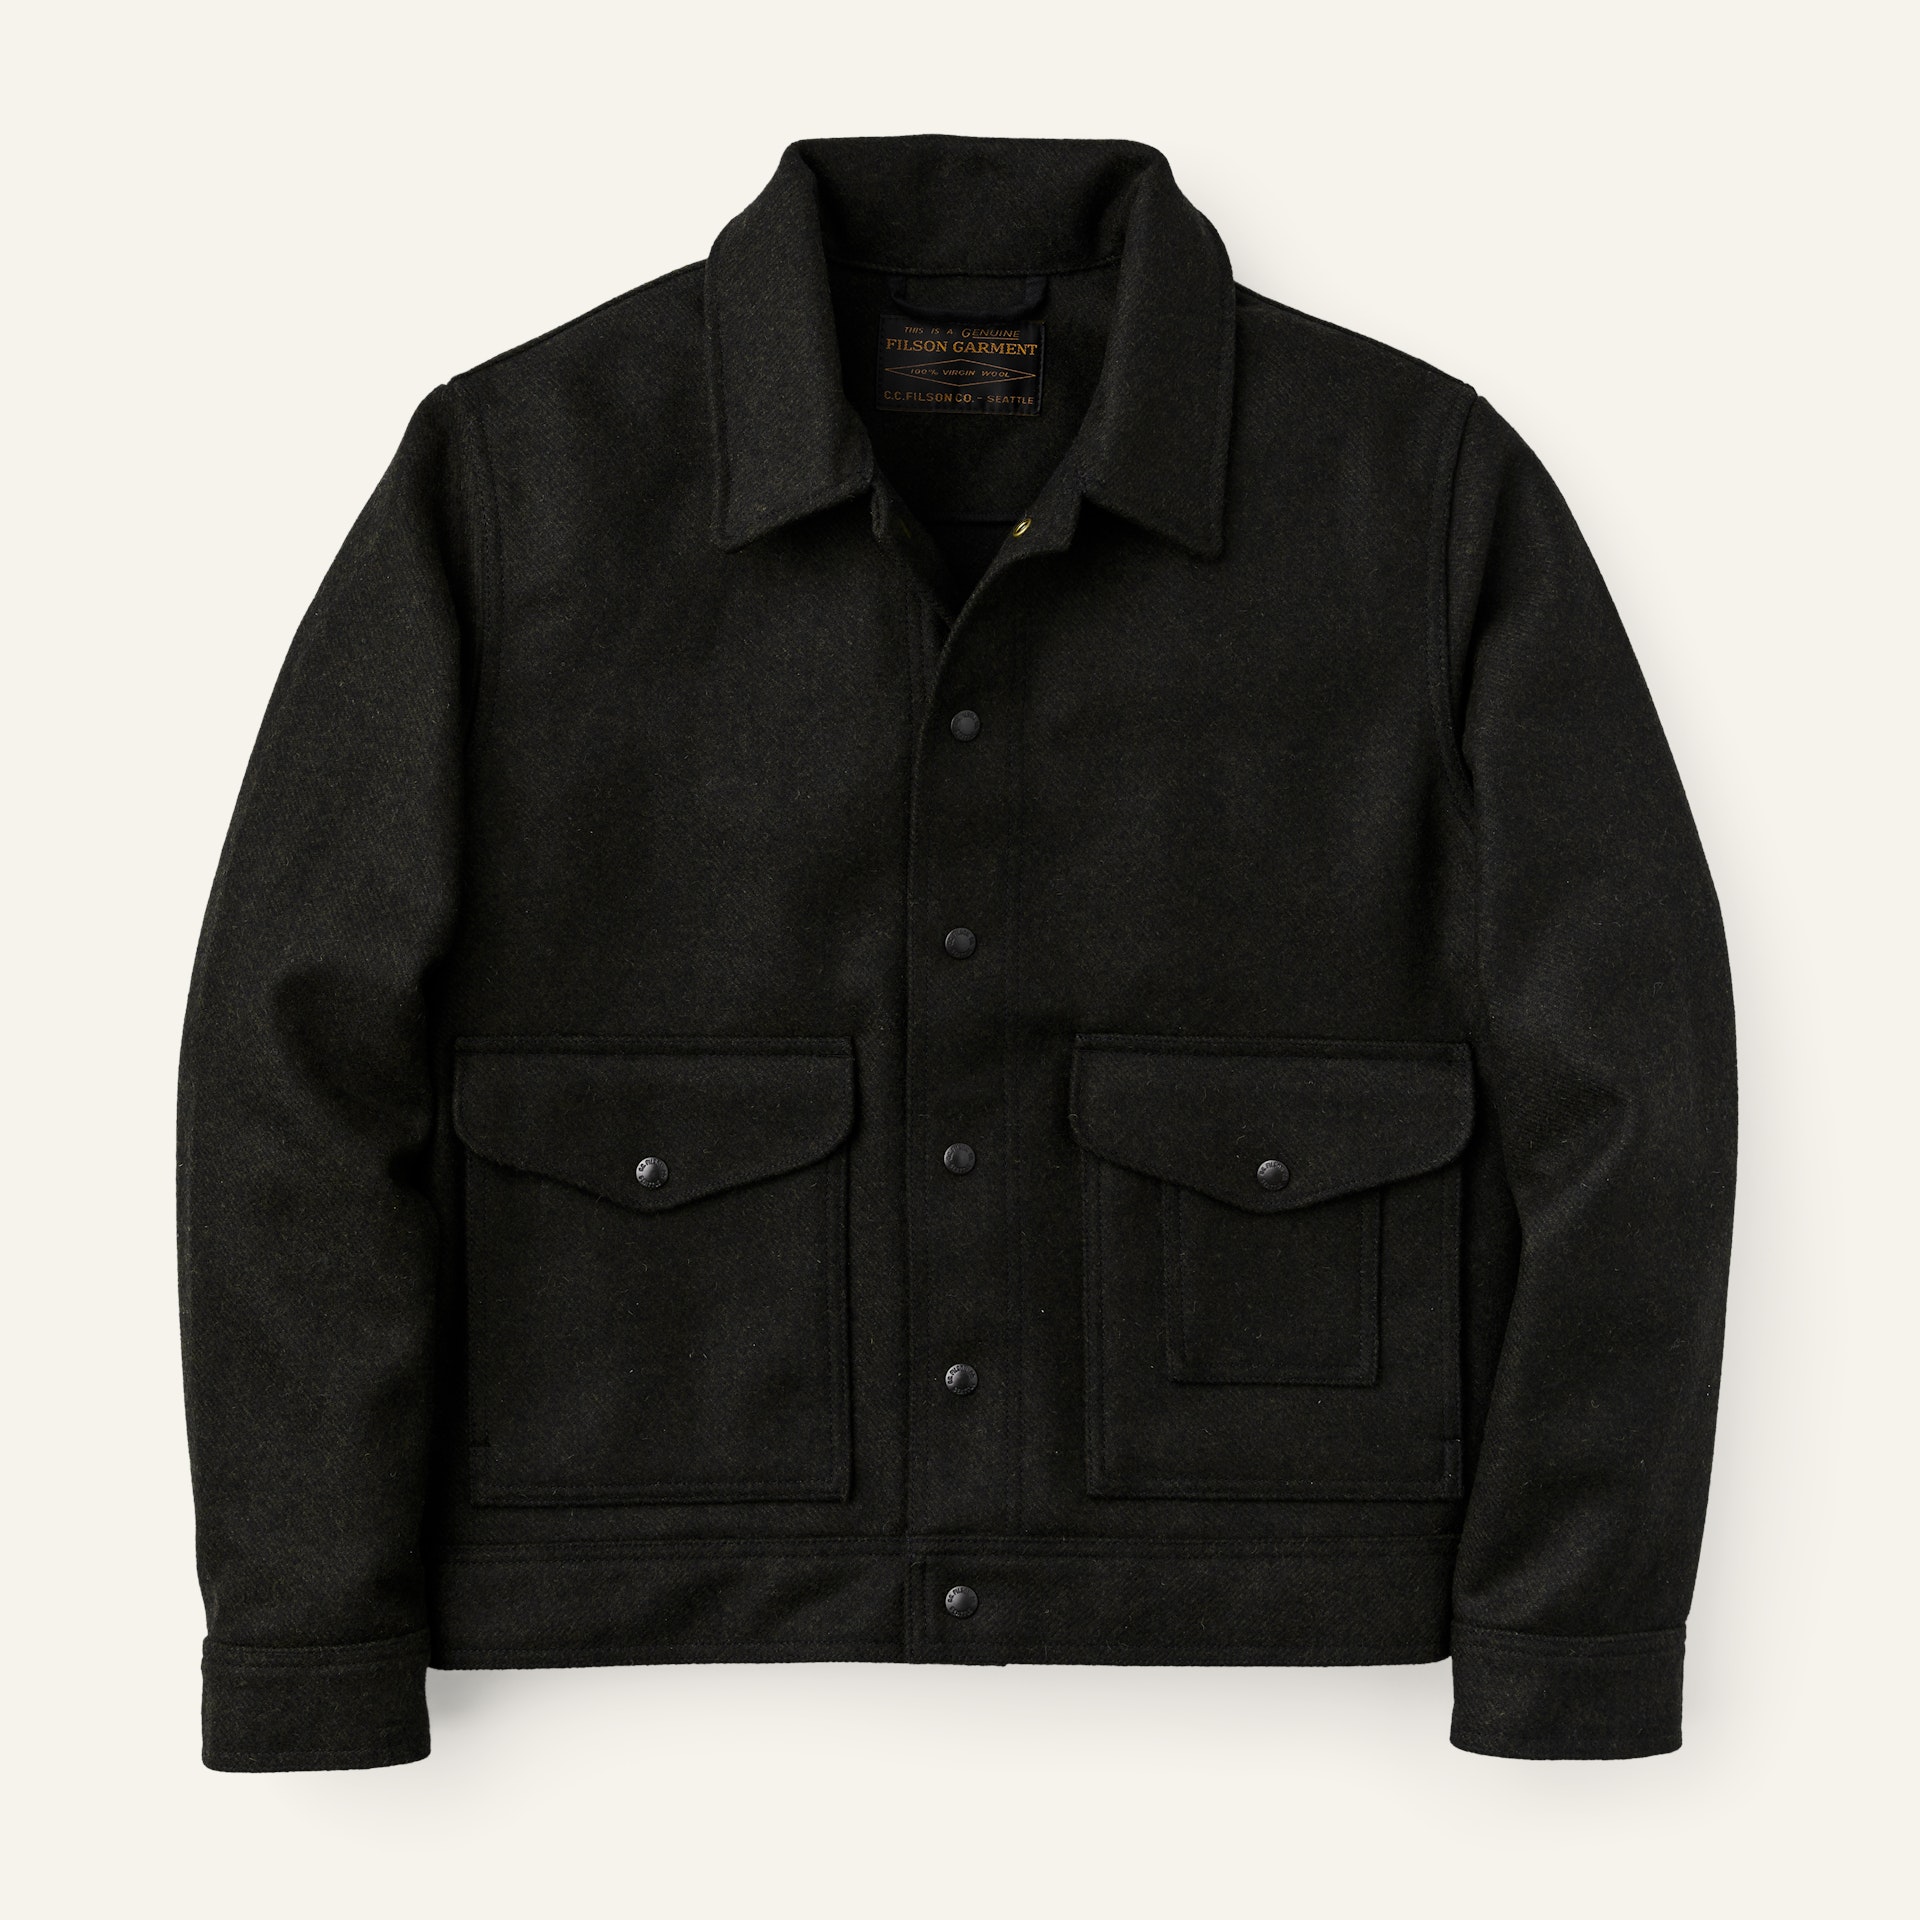 1950s Men’s Clothing & Fashion Mackinaw Wool Work Jacket $455.00 AT vintagedancer.com